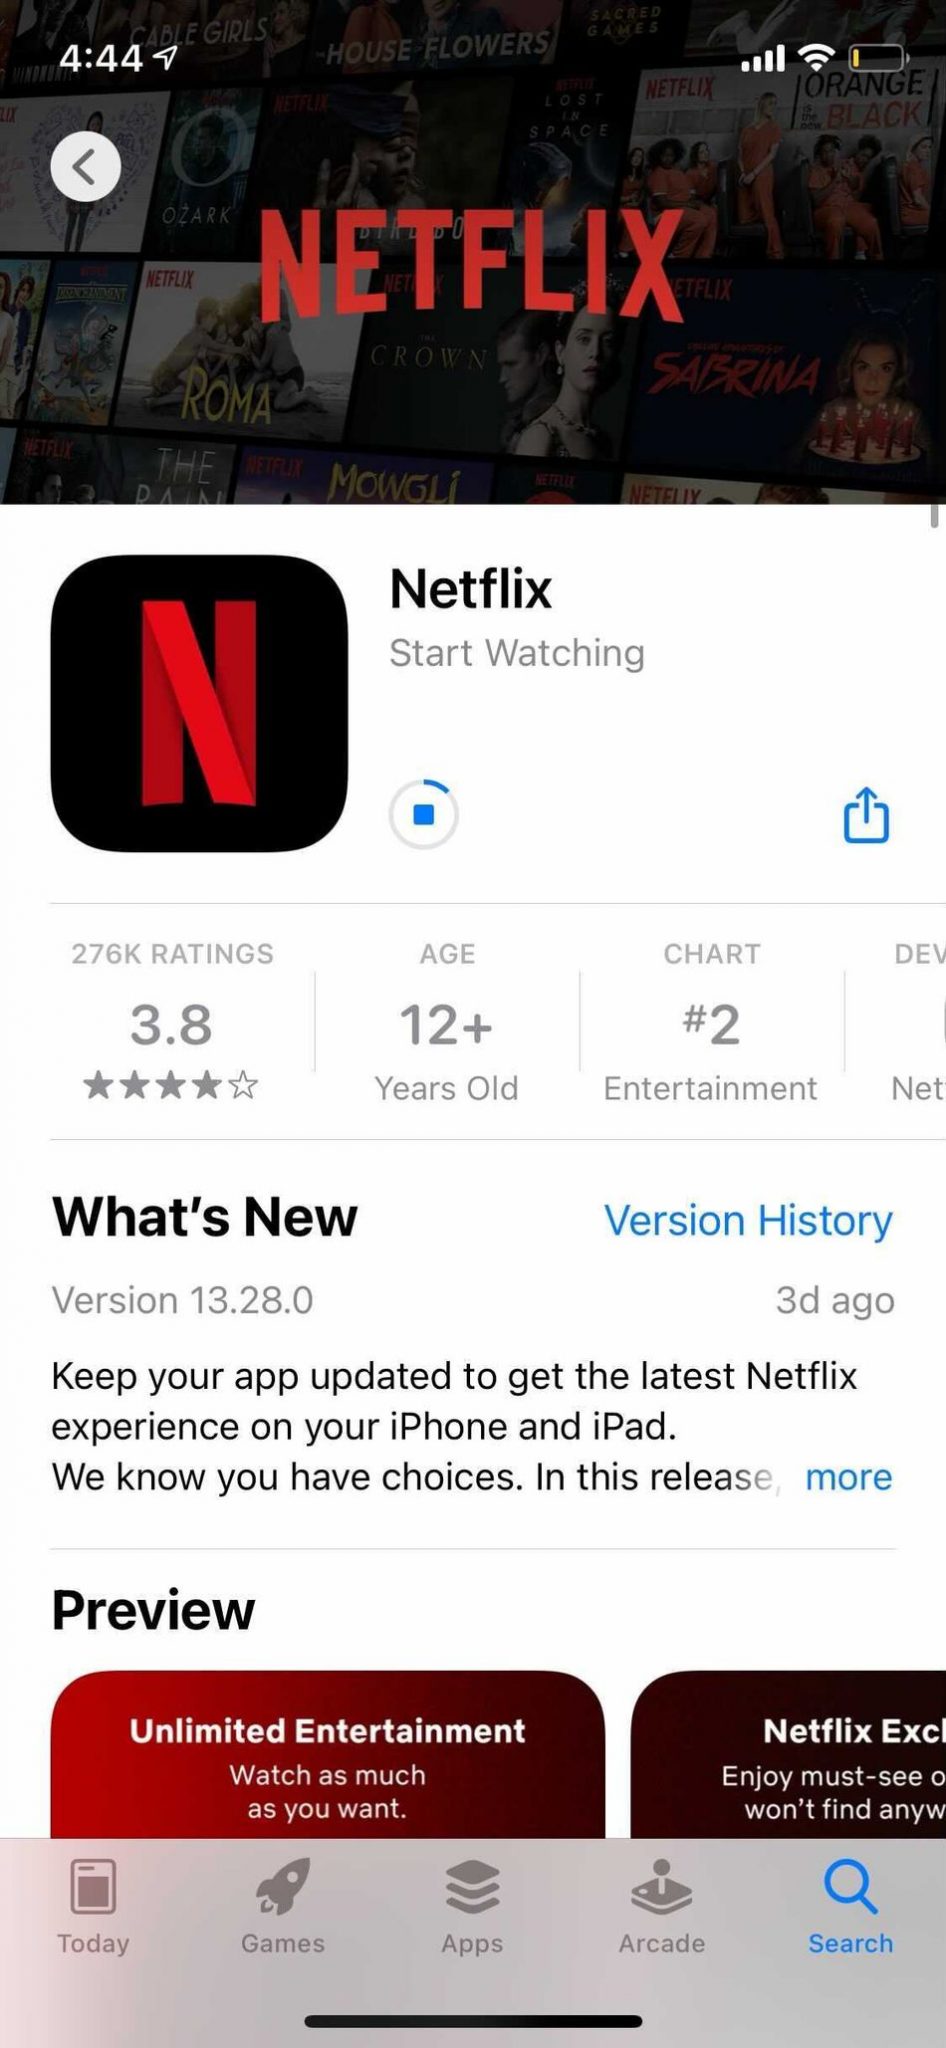 netflix download movies for offline viewing